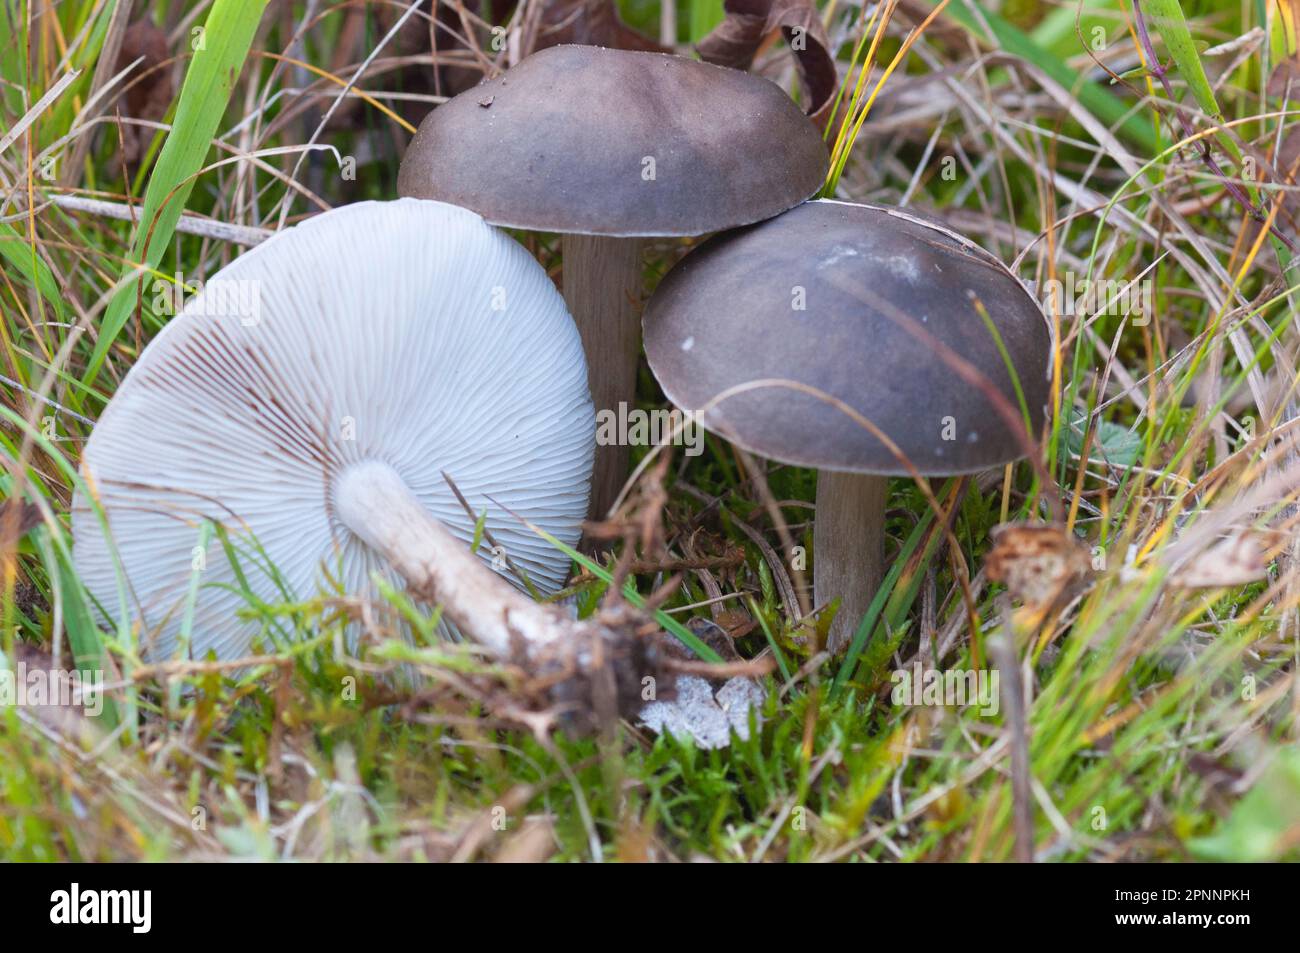 Dark fleshed soft mushroom Stock Photo